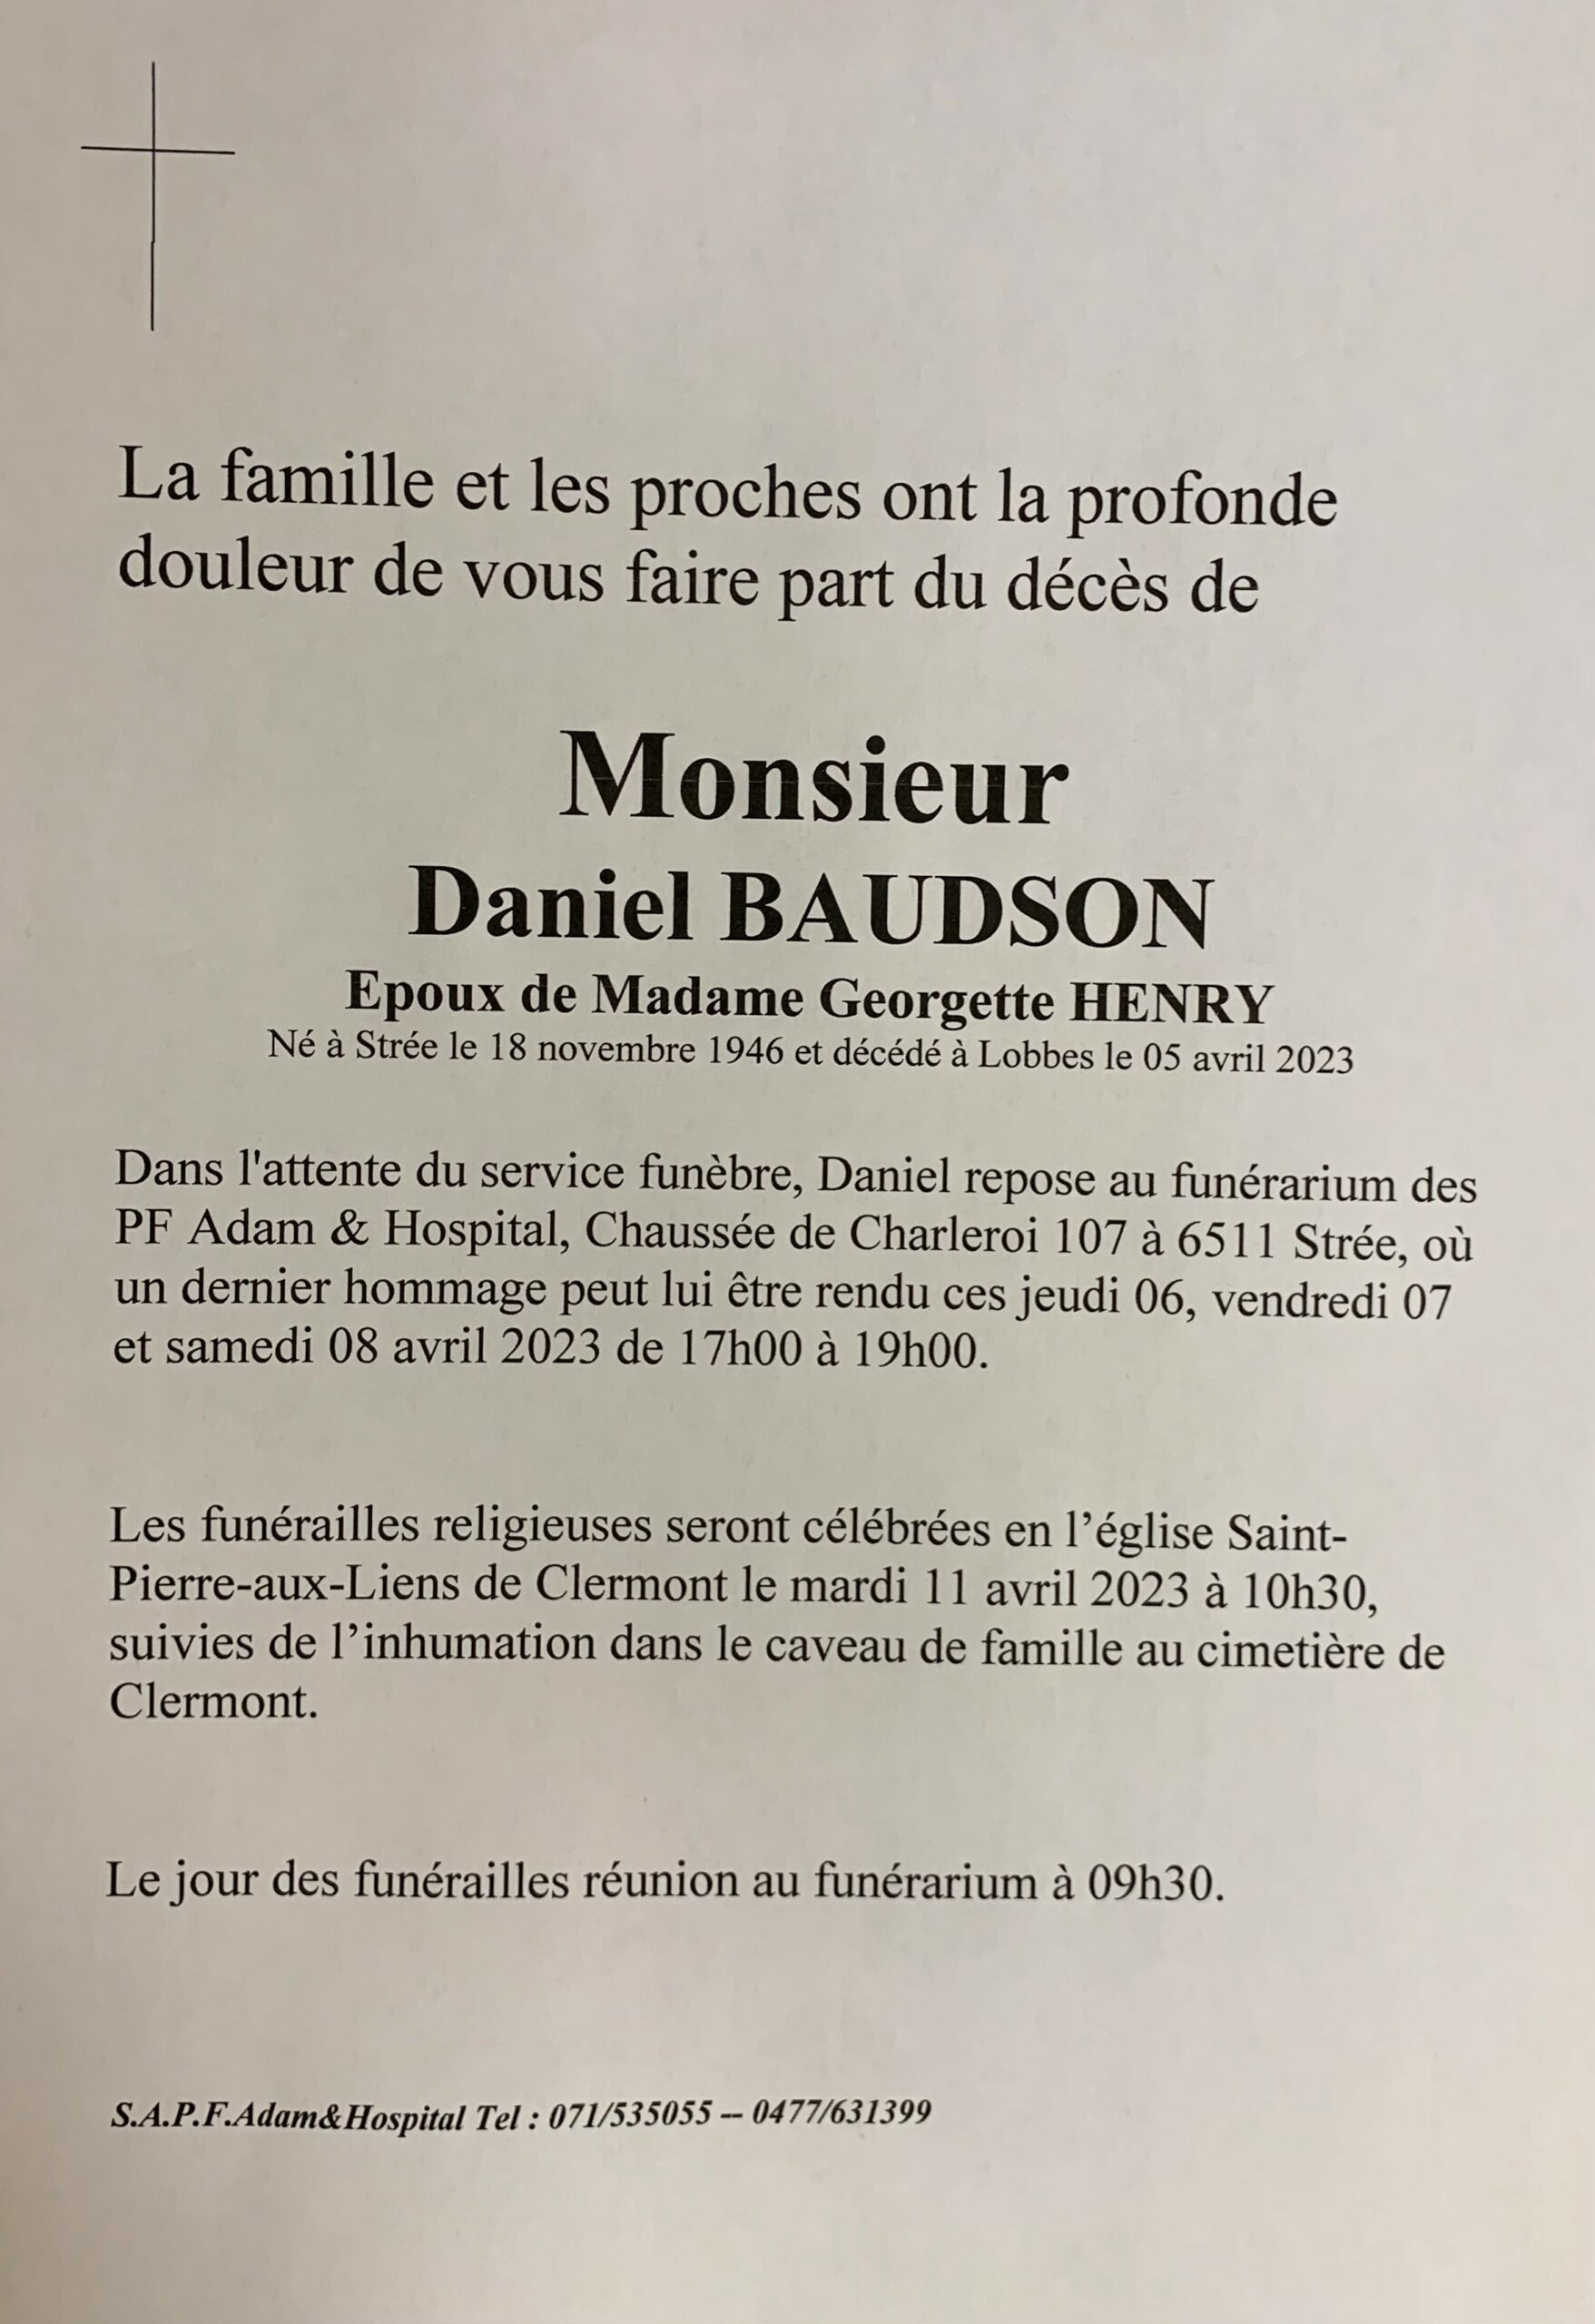 Monsieur Daniel BAUDSON scaled | Funérailles Adam Hospital